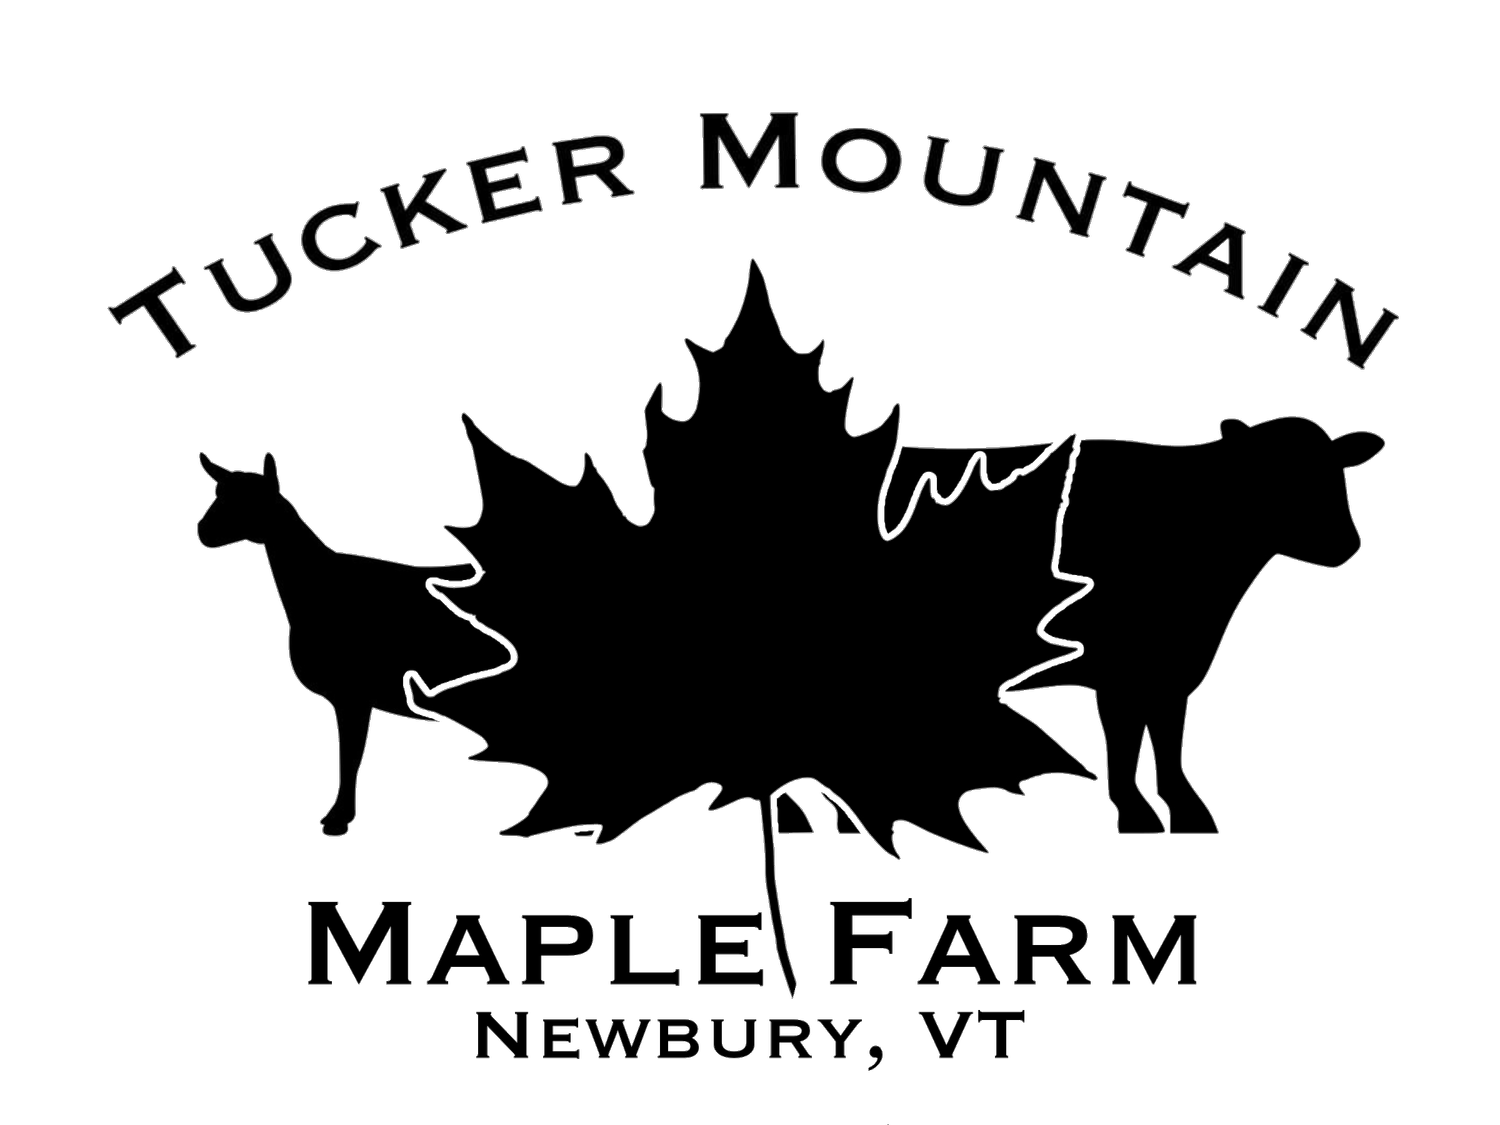 Tucker Mountain Maple Farm